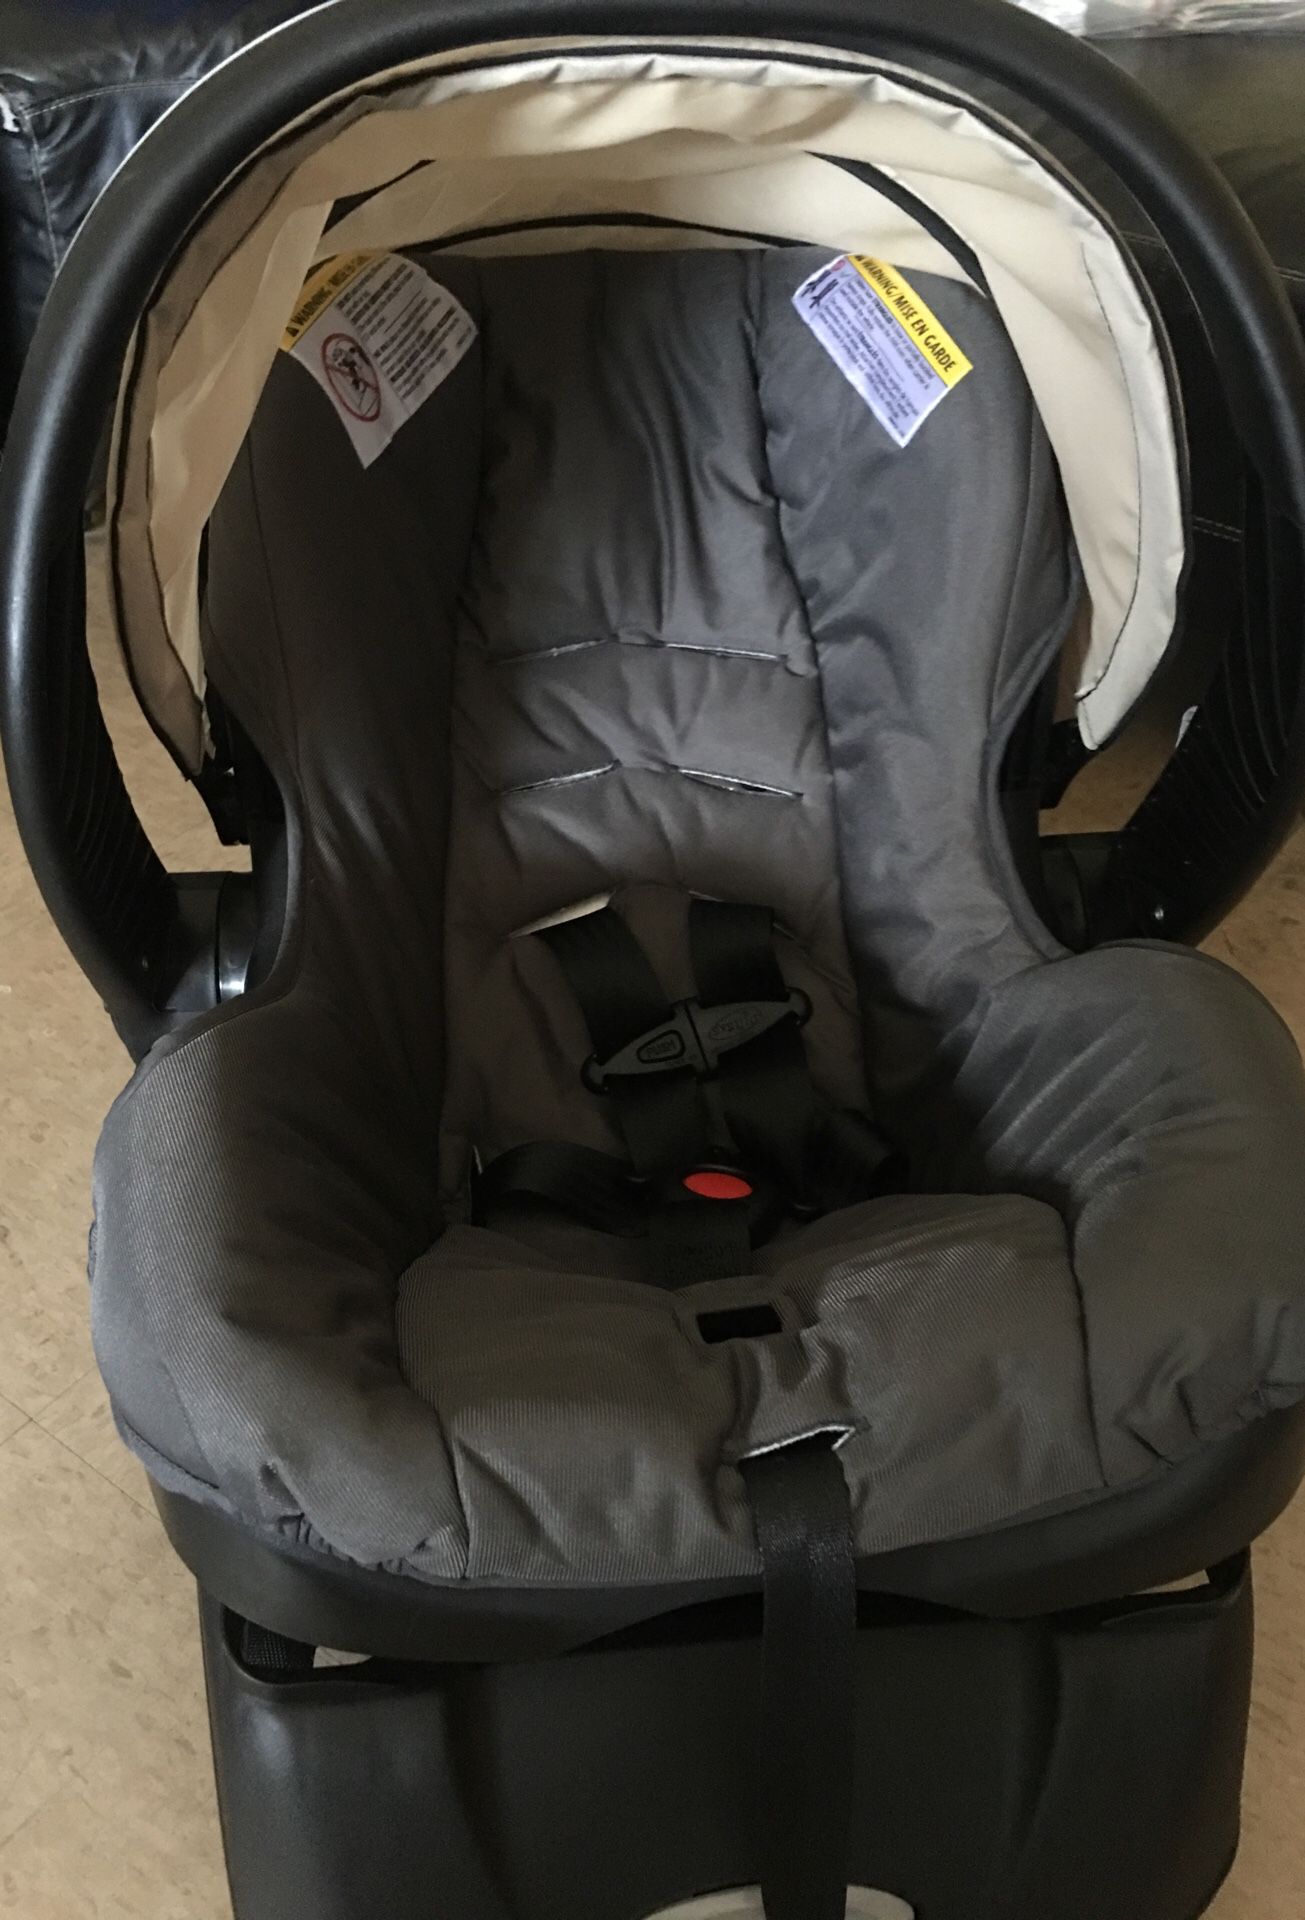 Infant car seat FREE